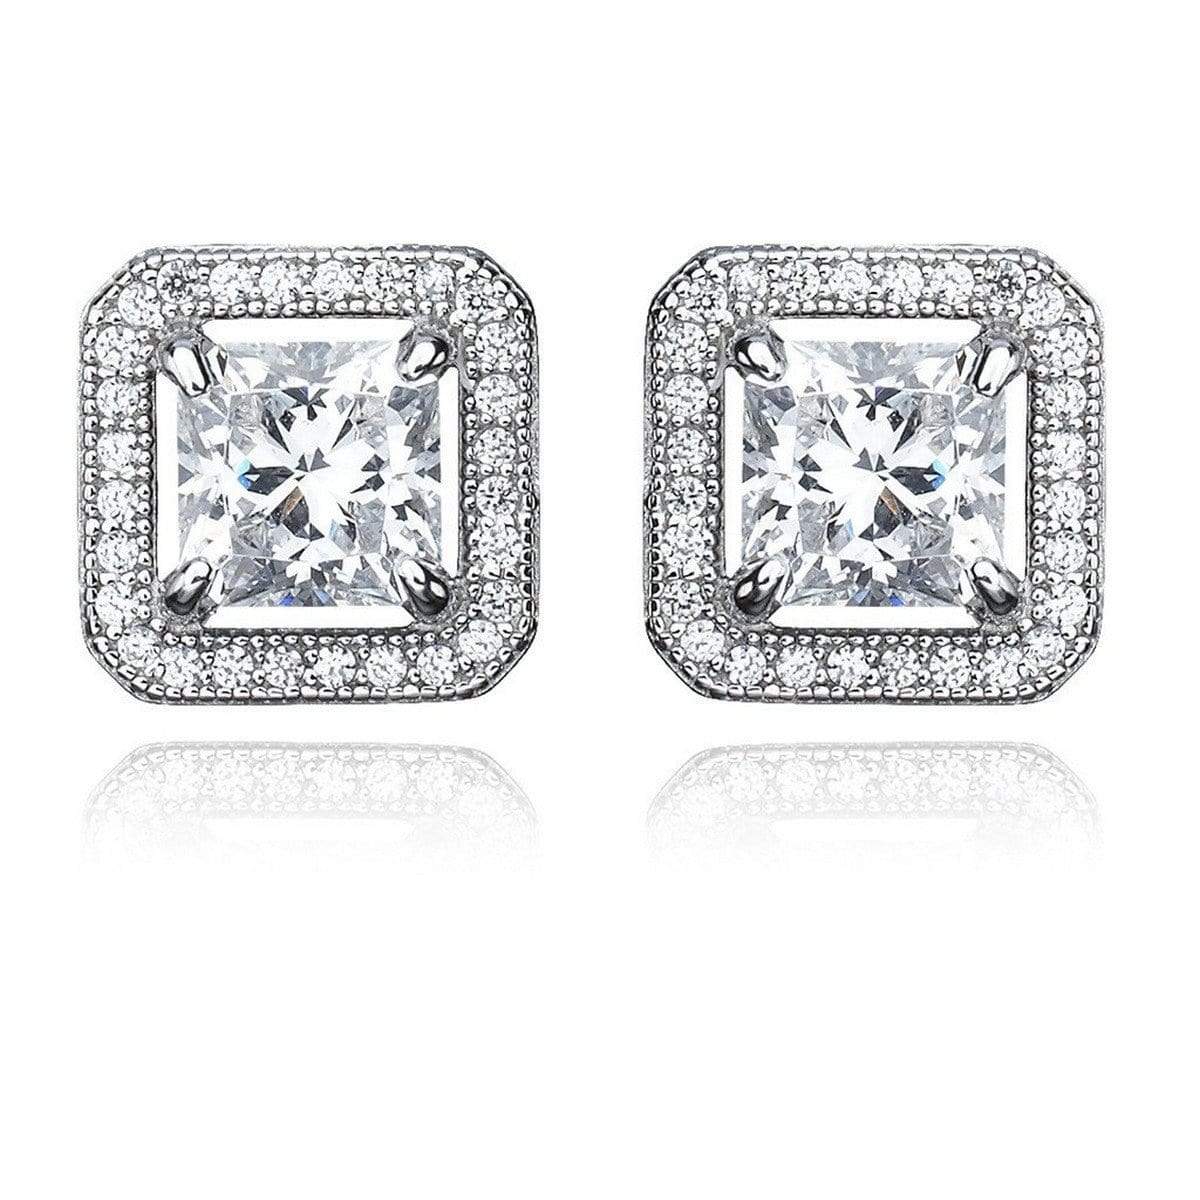 Crislu Jewelry CRISLU Princess Cut 3.0 Carat Earrings With Halo Finished in Pure Platinum